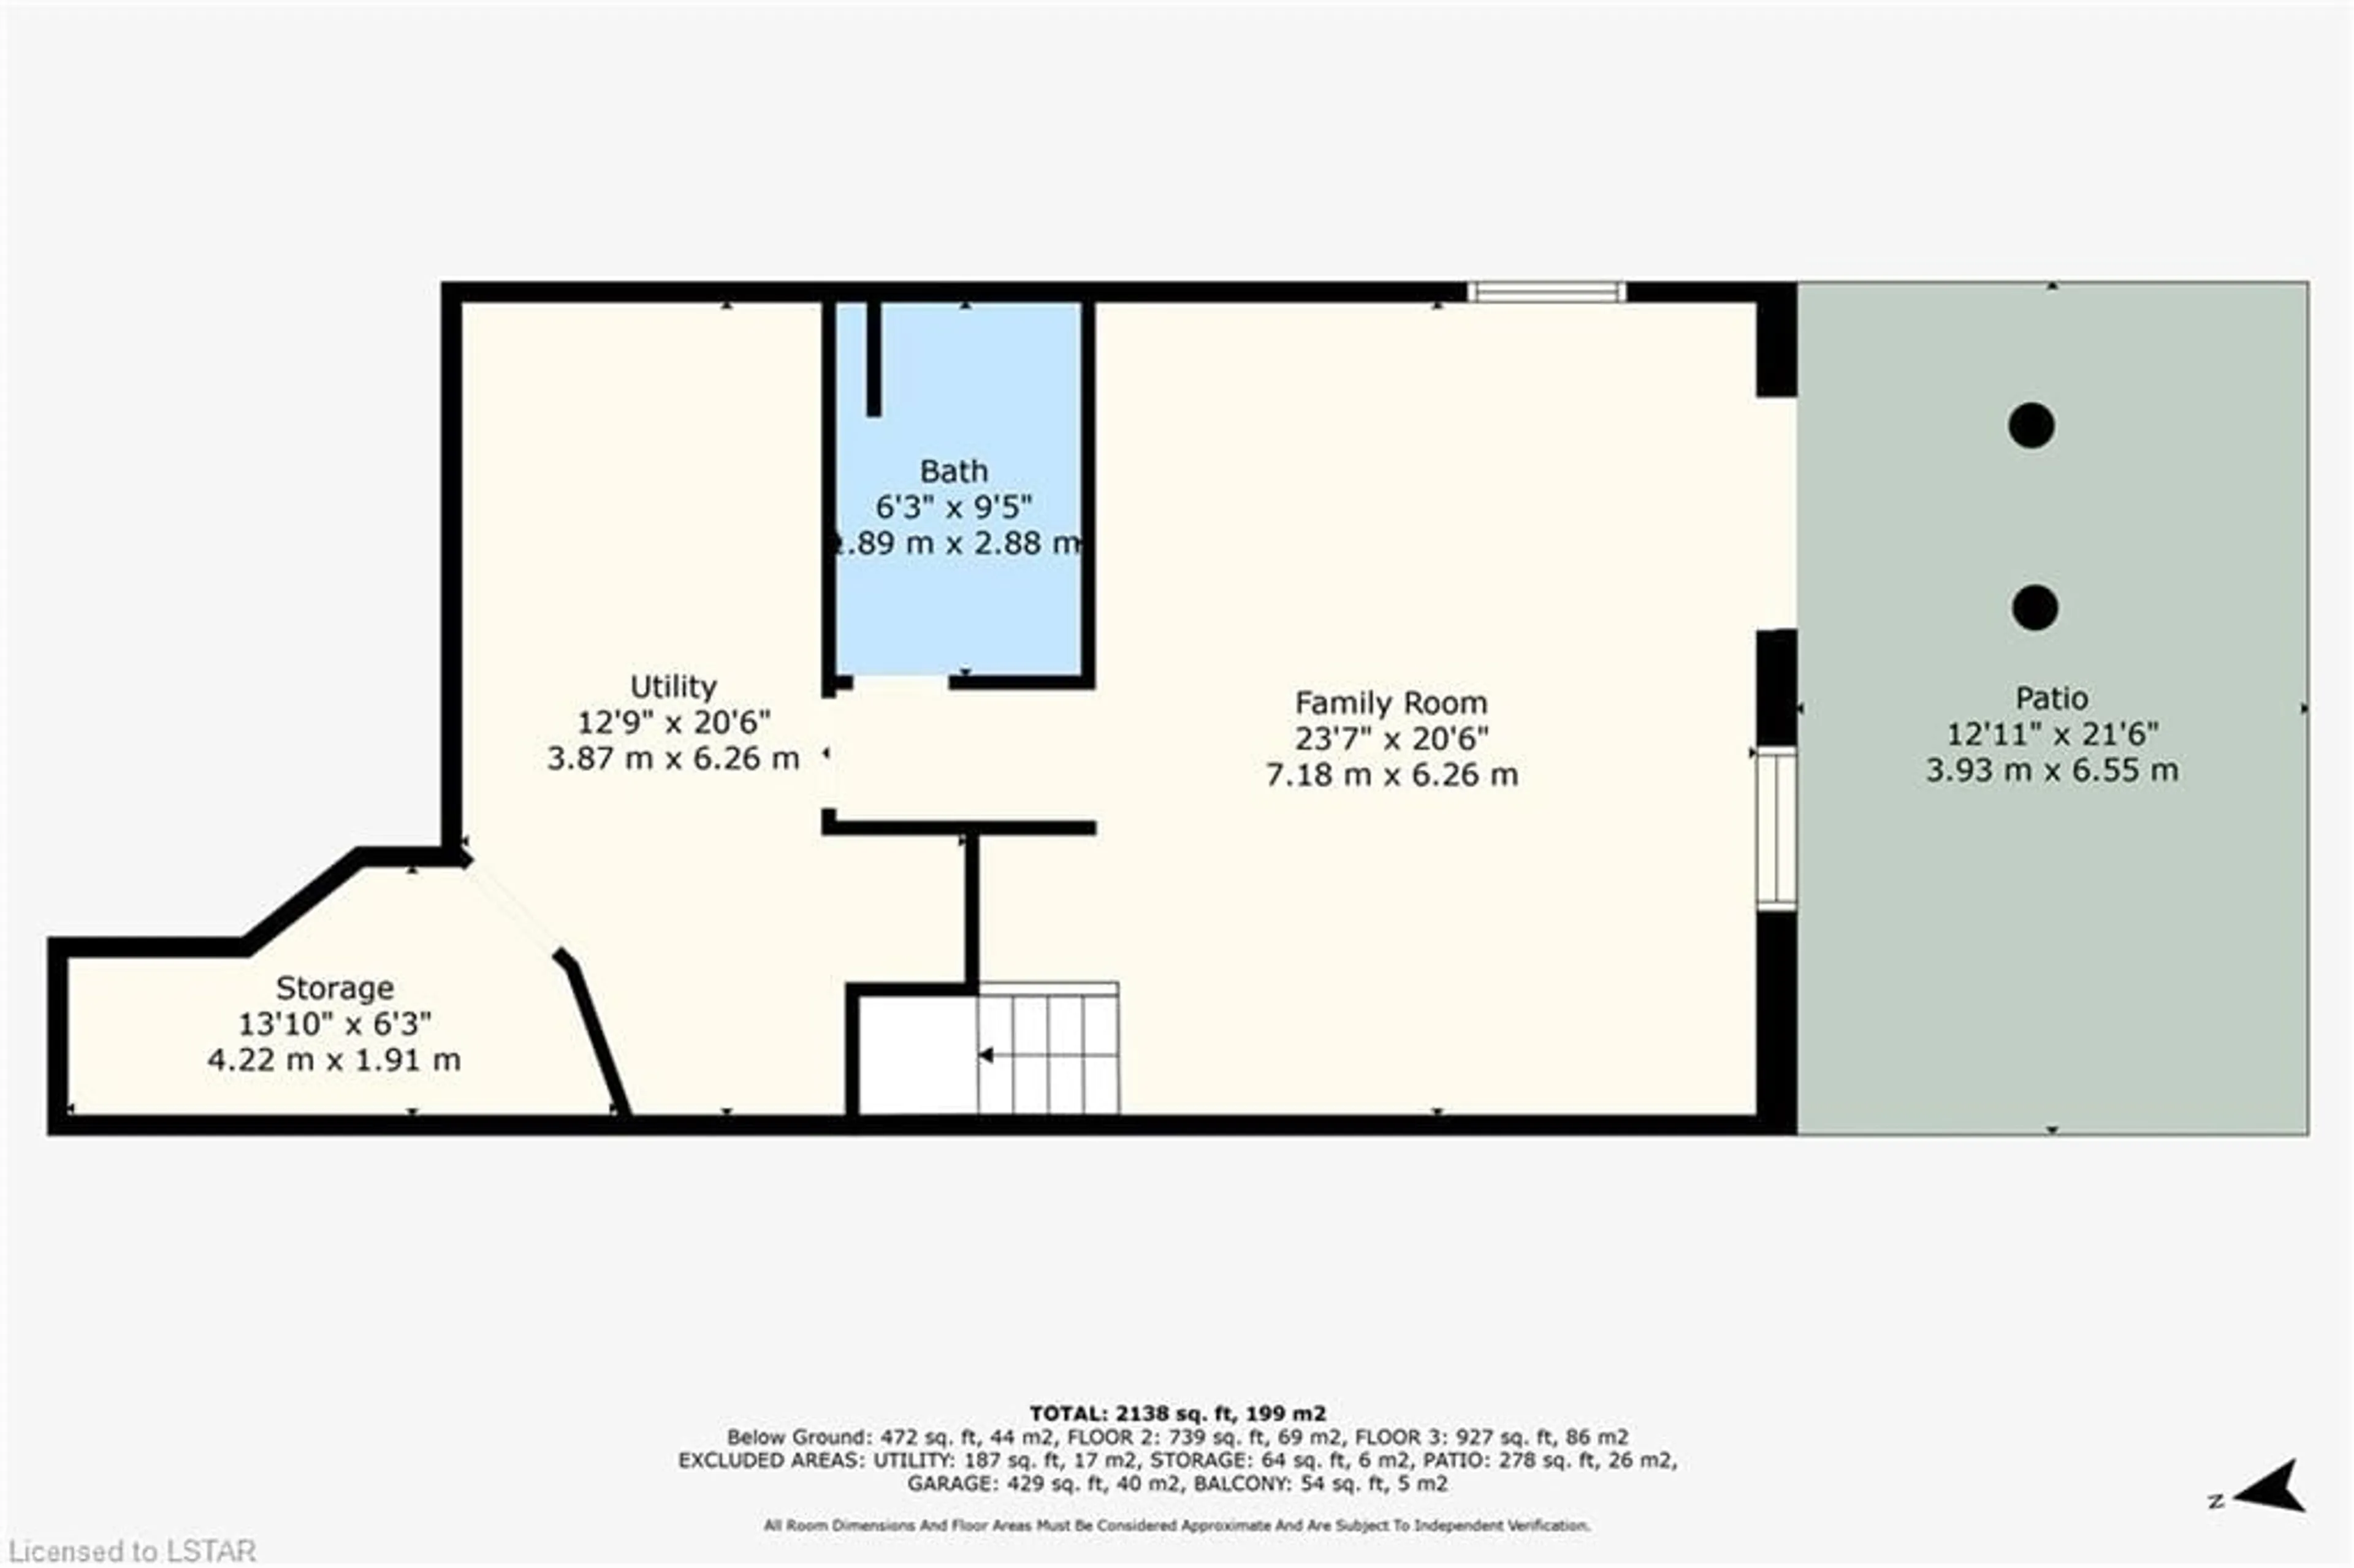 Floor plan for 943 Blythwood Rd, London Ontario N6H 5W1